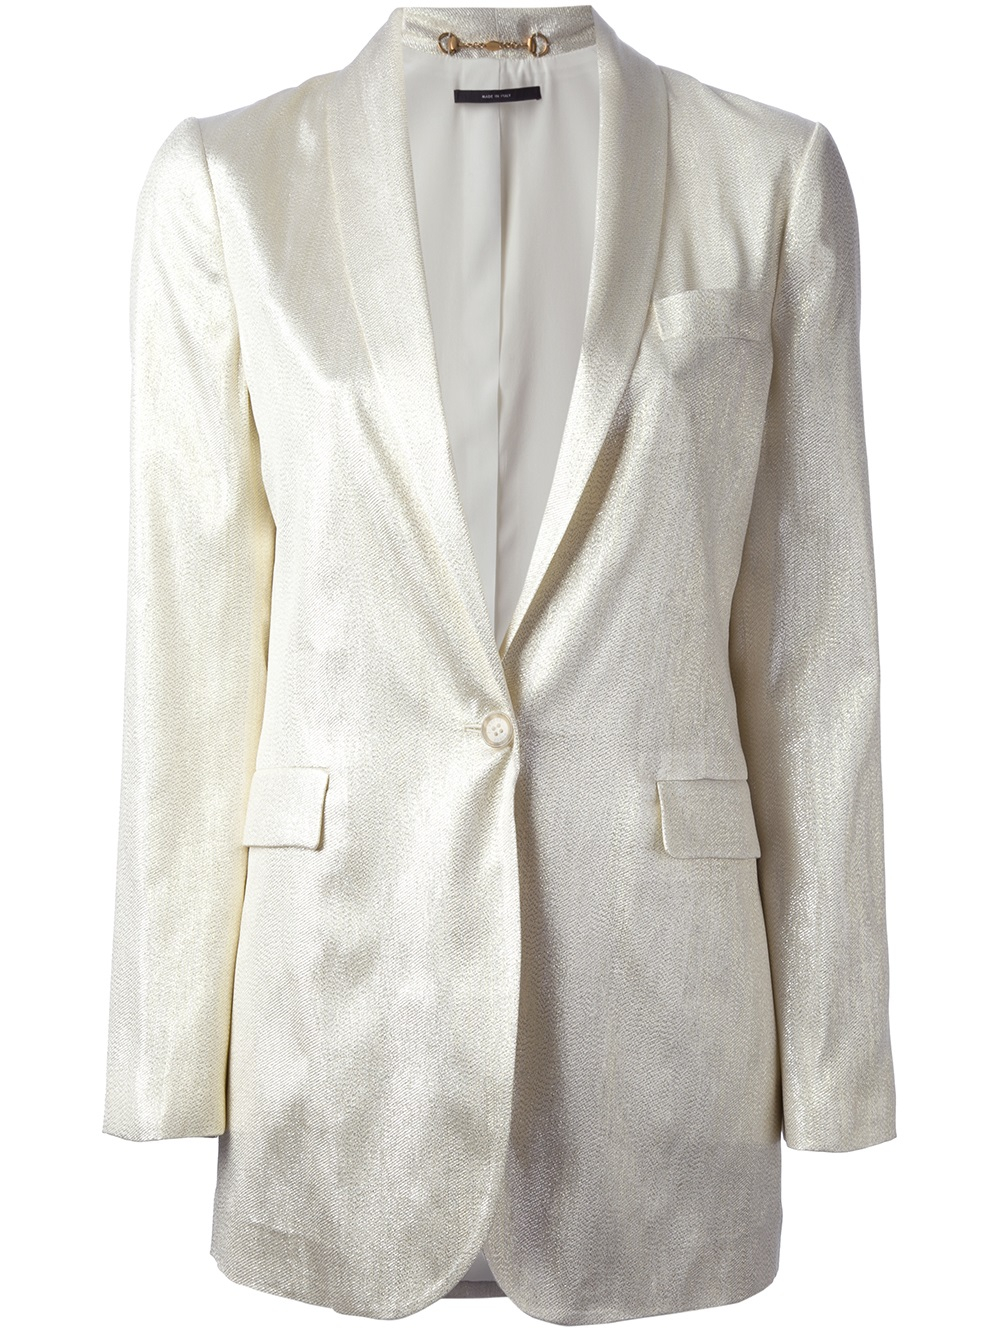 Lyst - Gucci Long Blazer in White